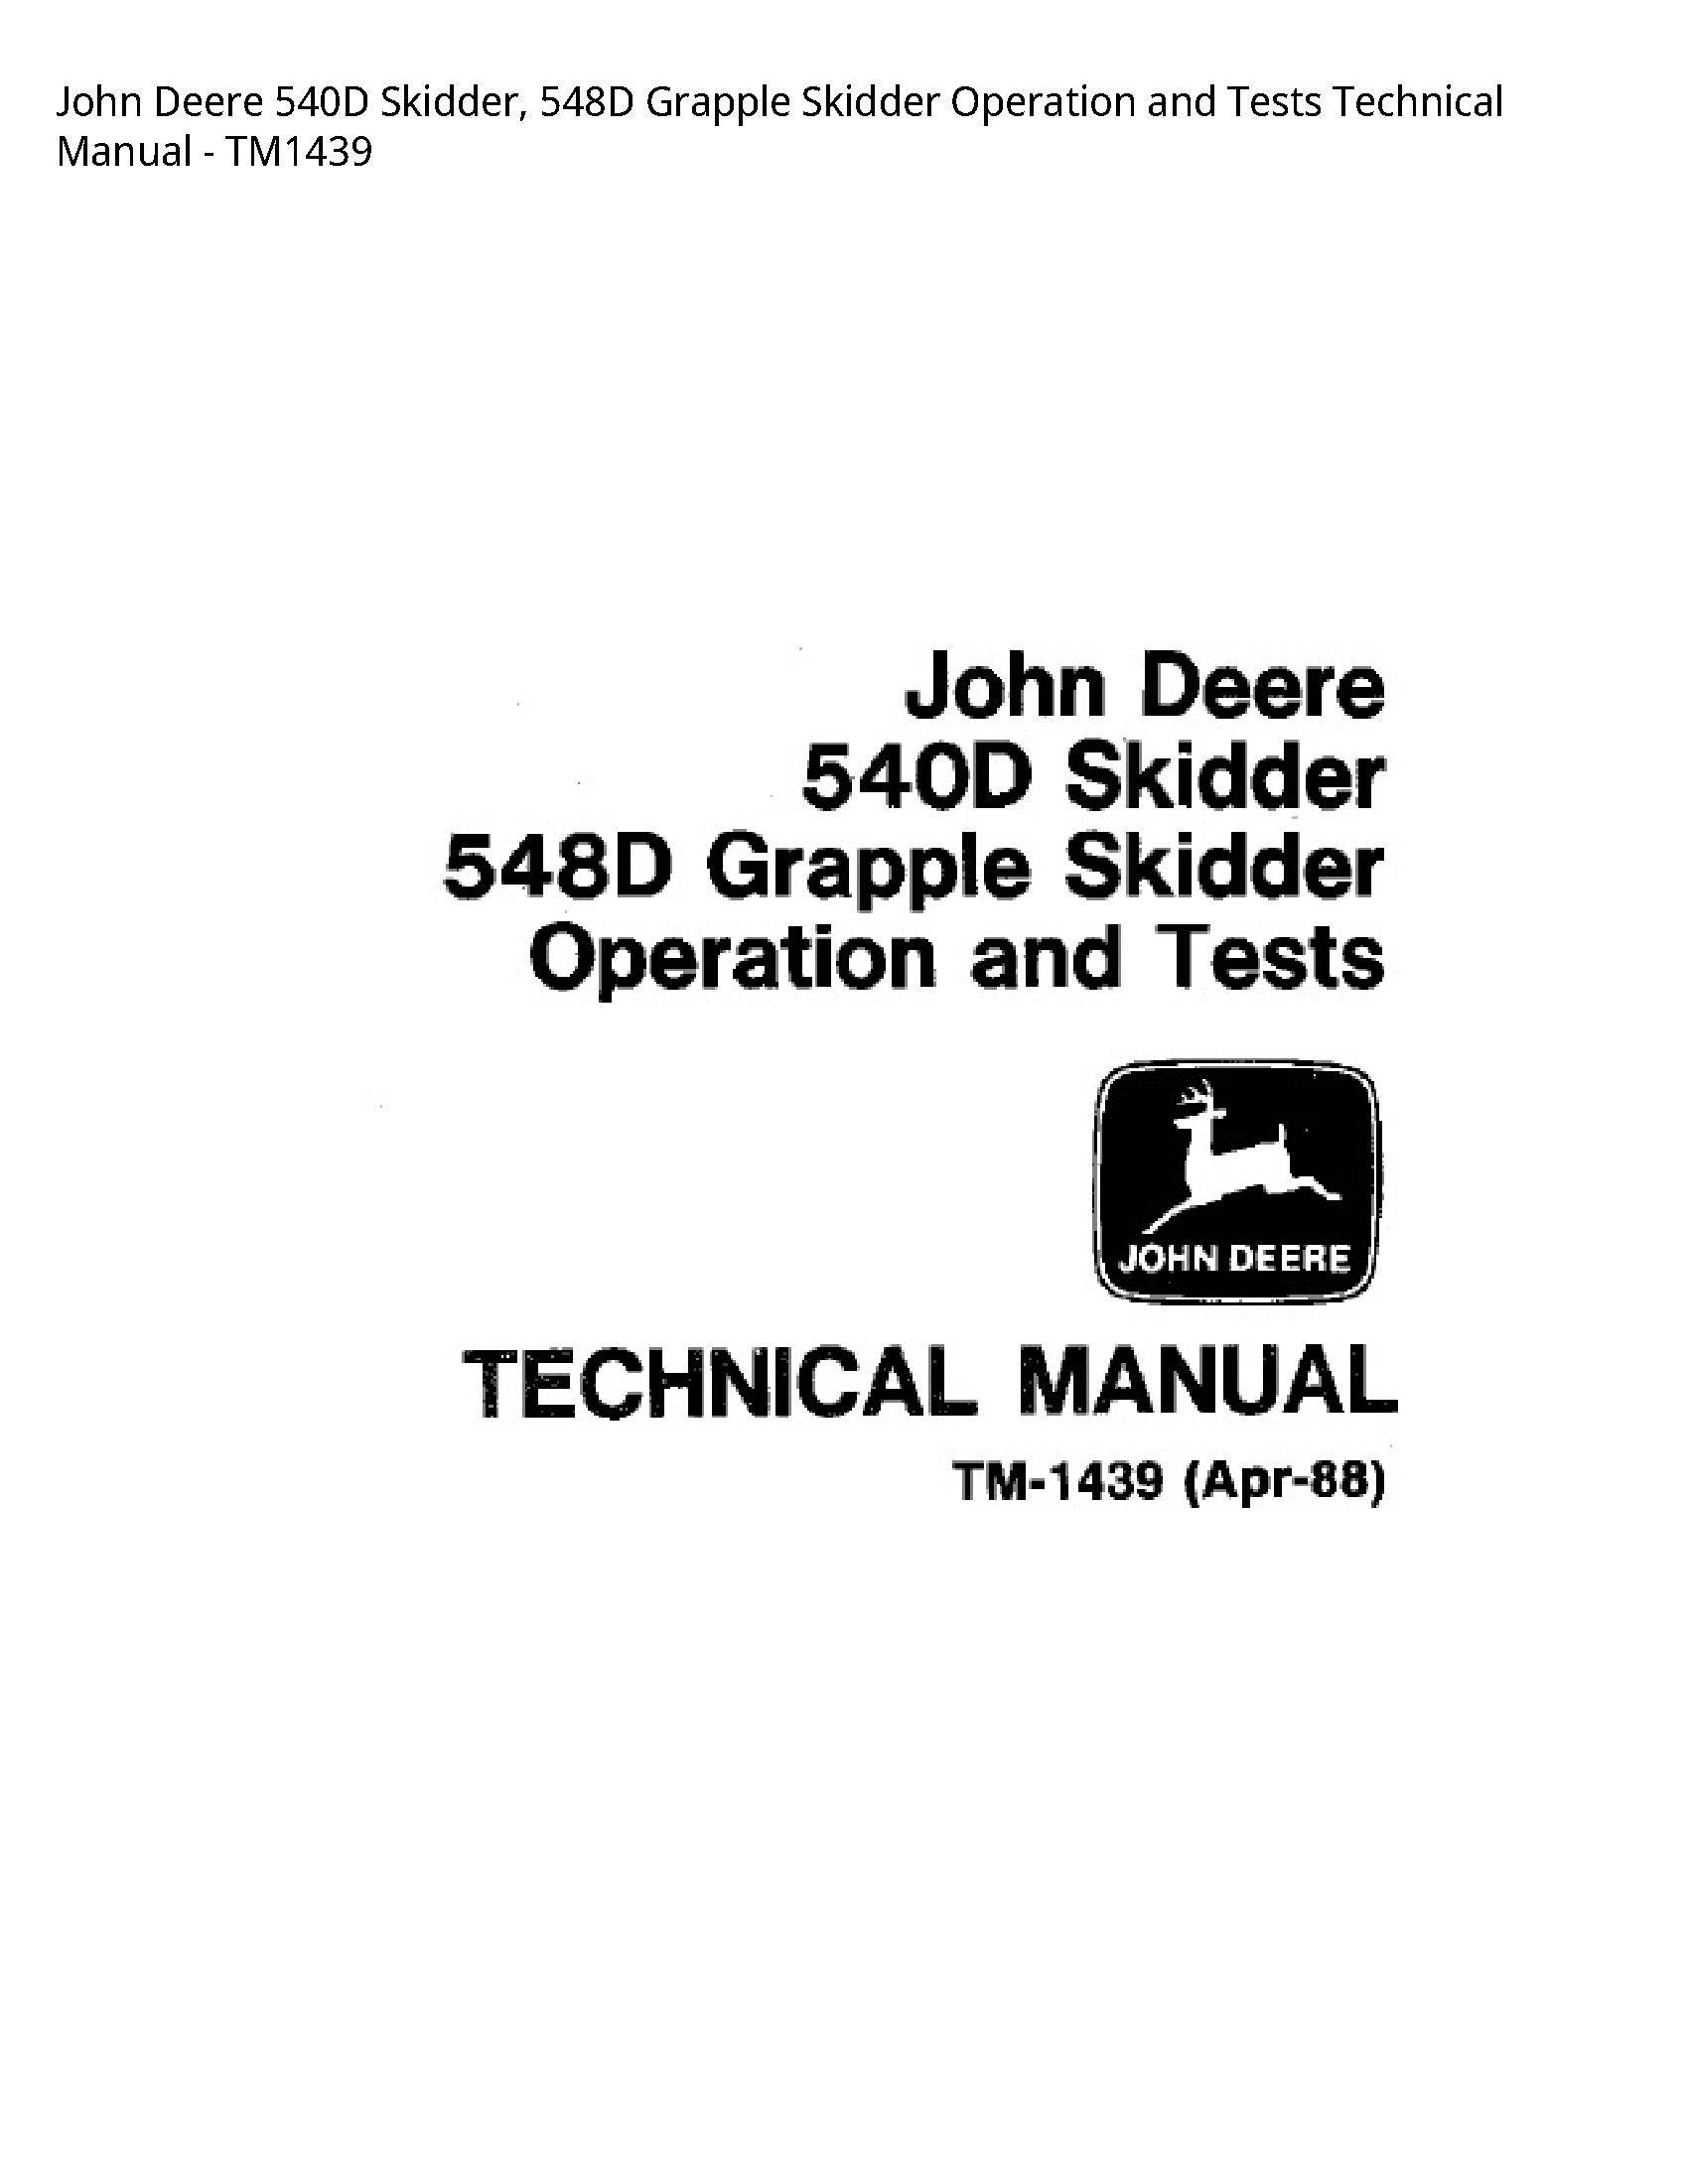 John Deere 540D Skidder manual